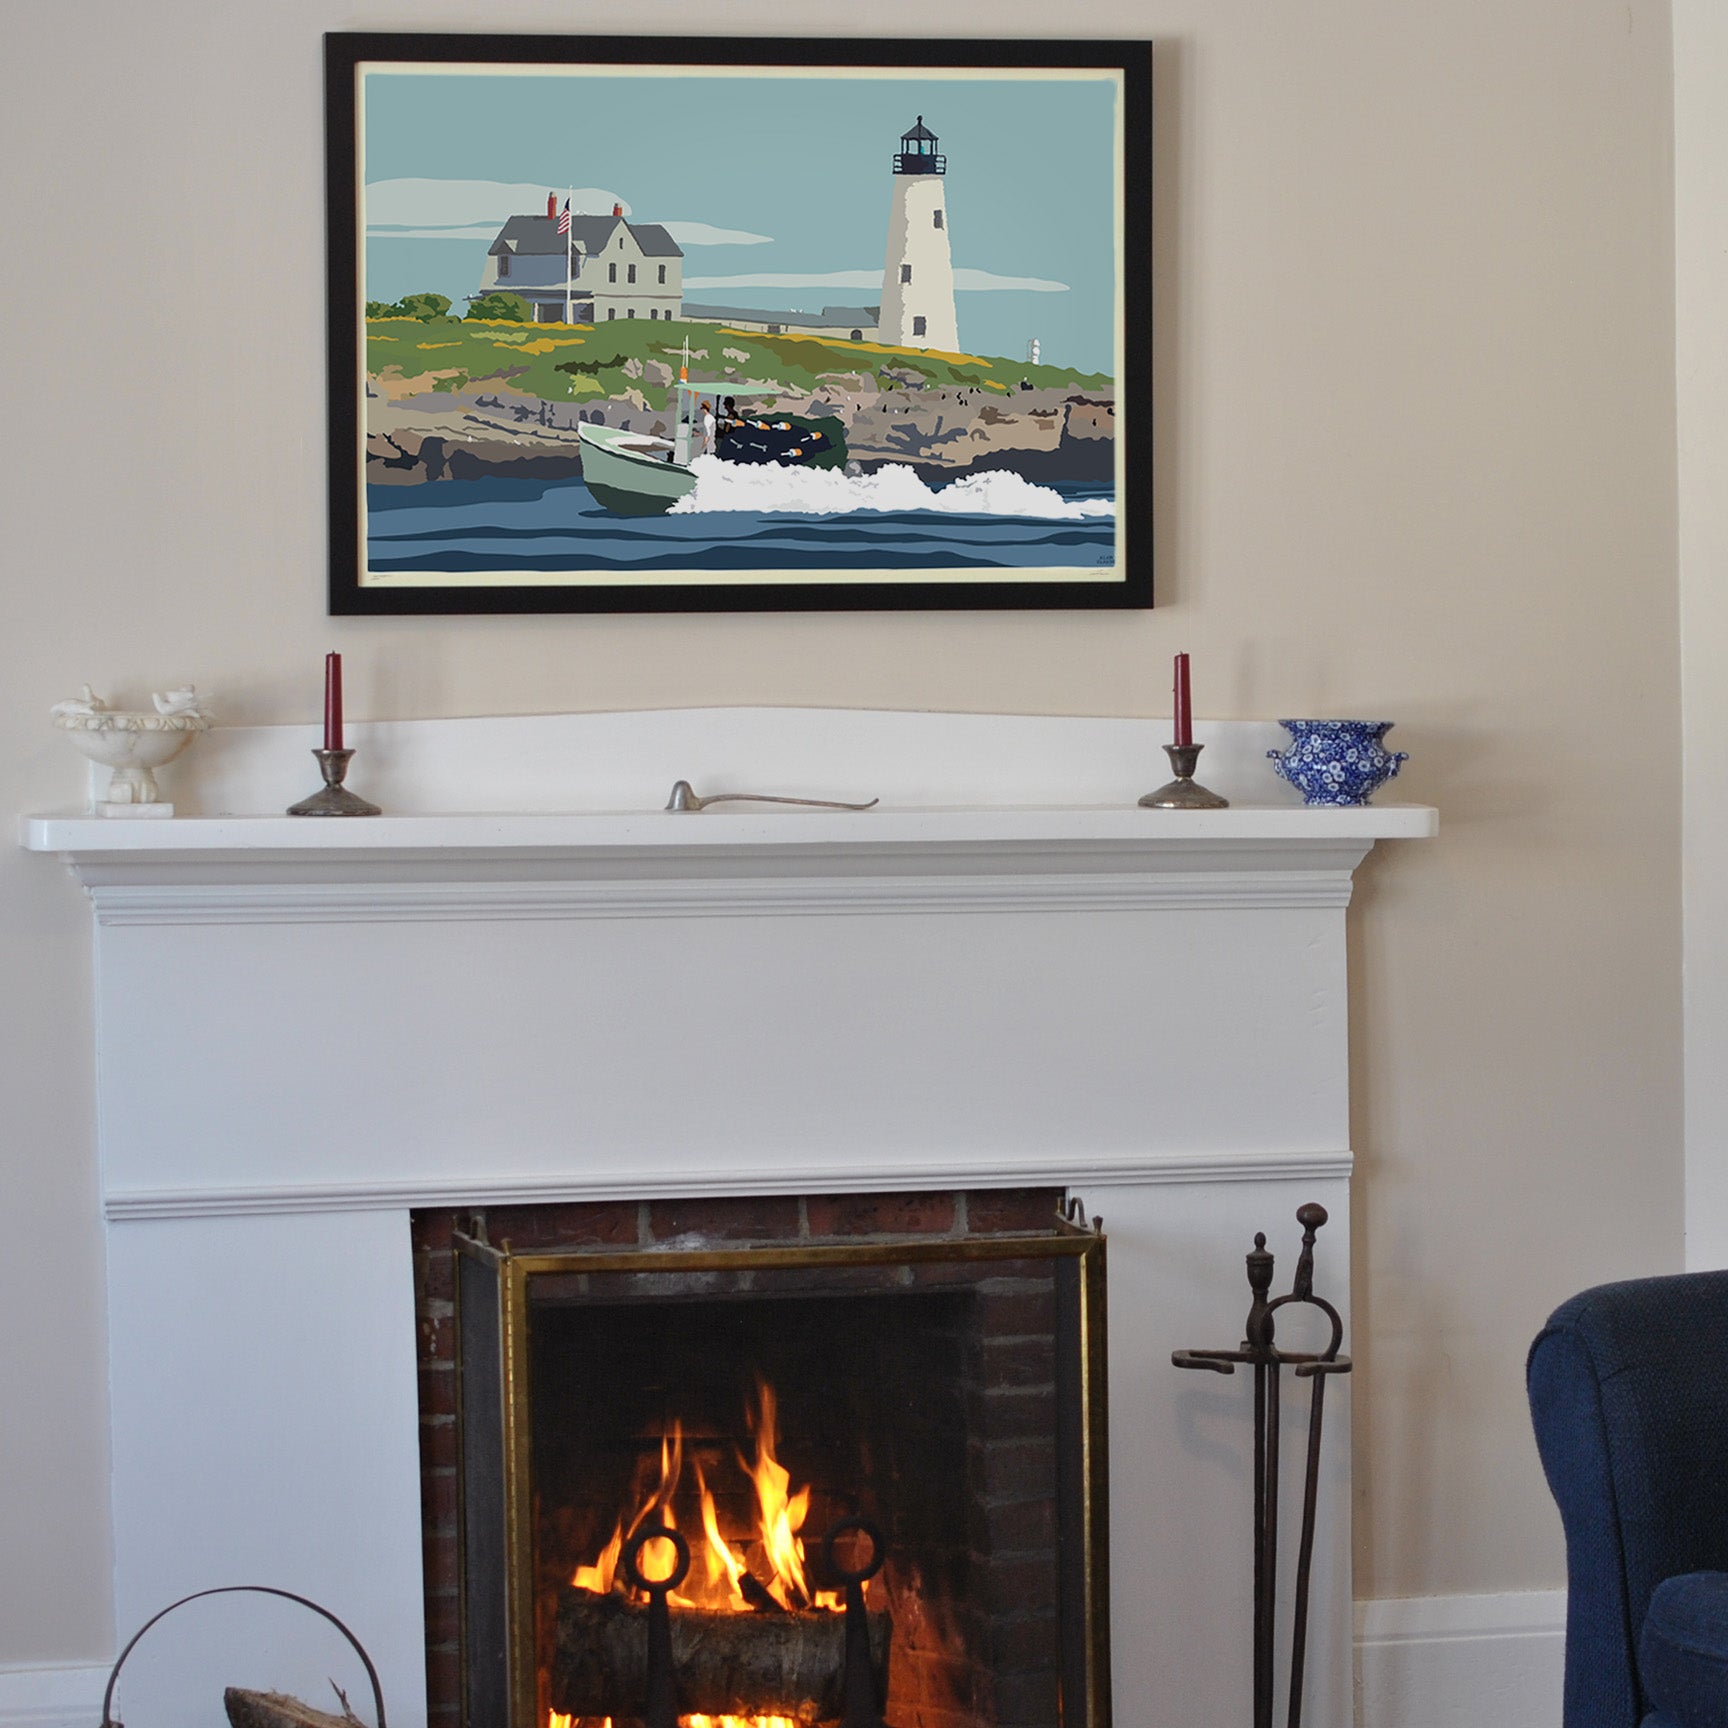 Wood Island Light Art Print 24" x 36" Framed Wall Poster By Alan Claude - Maine